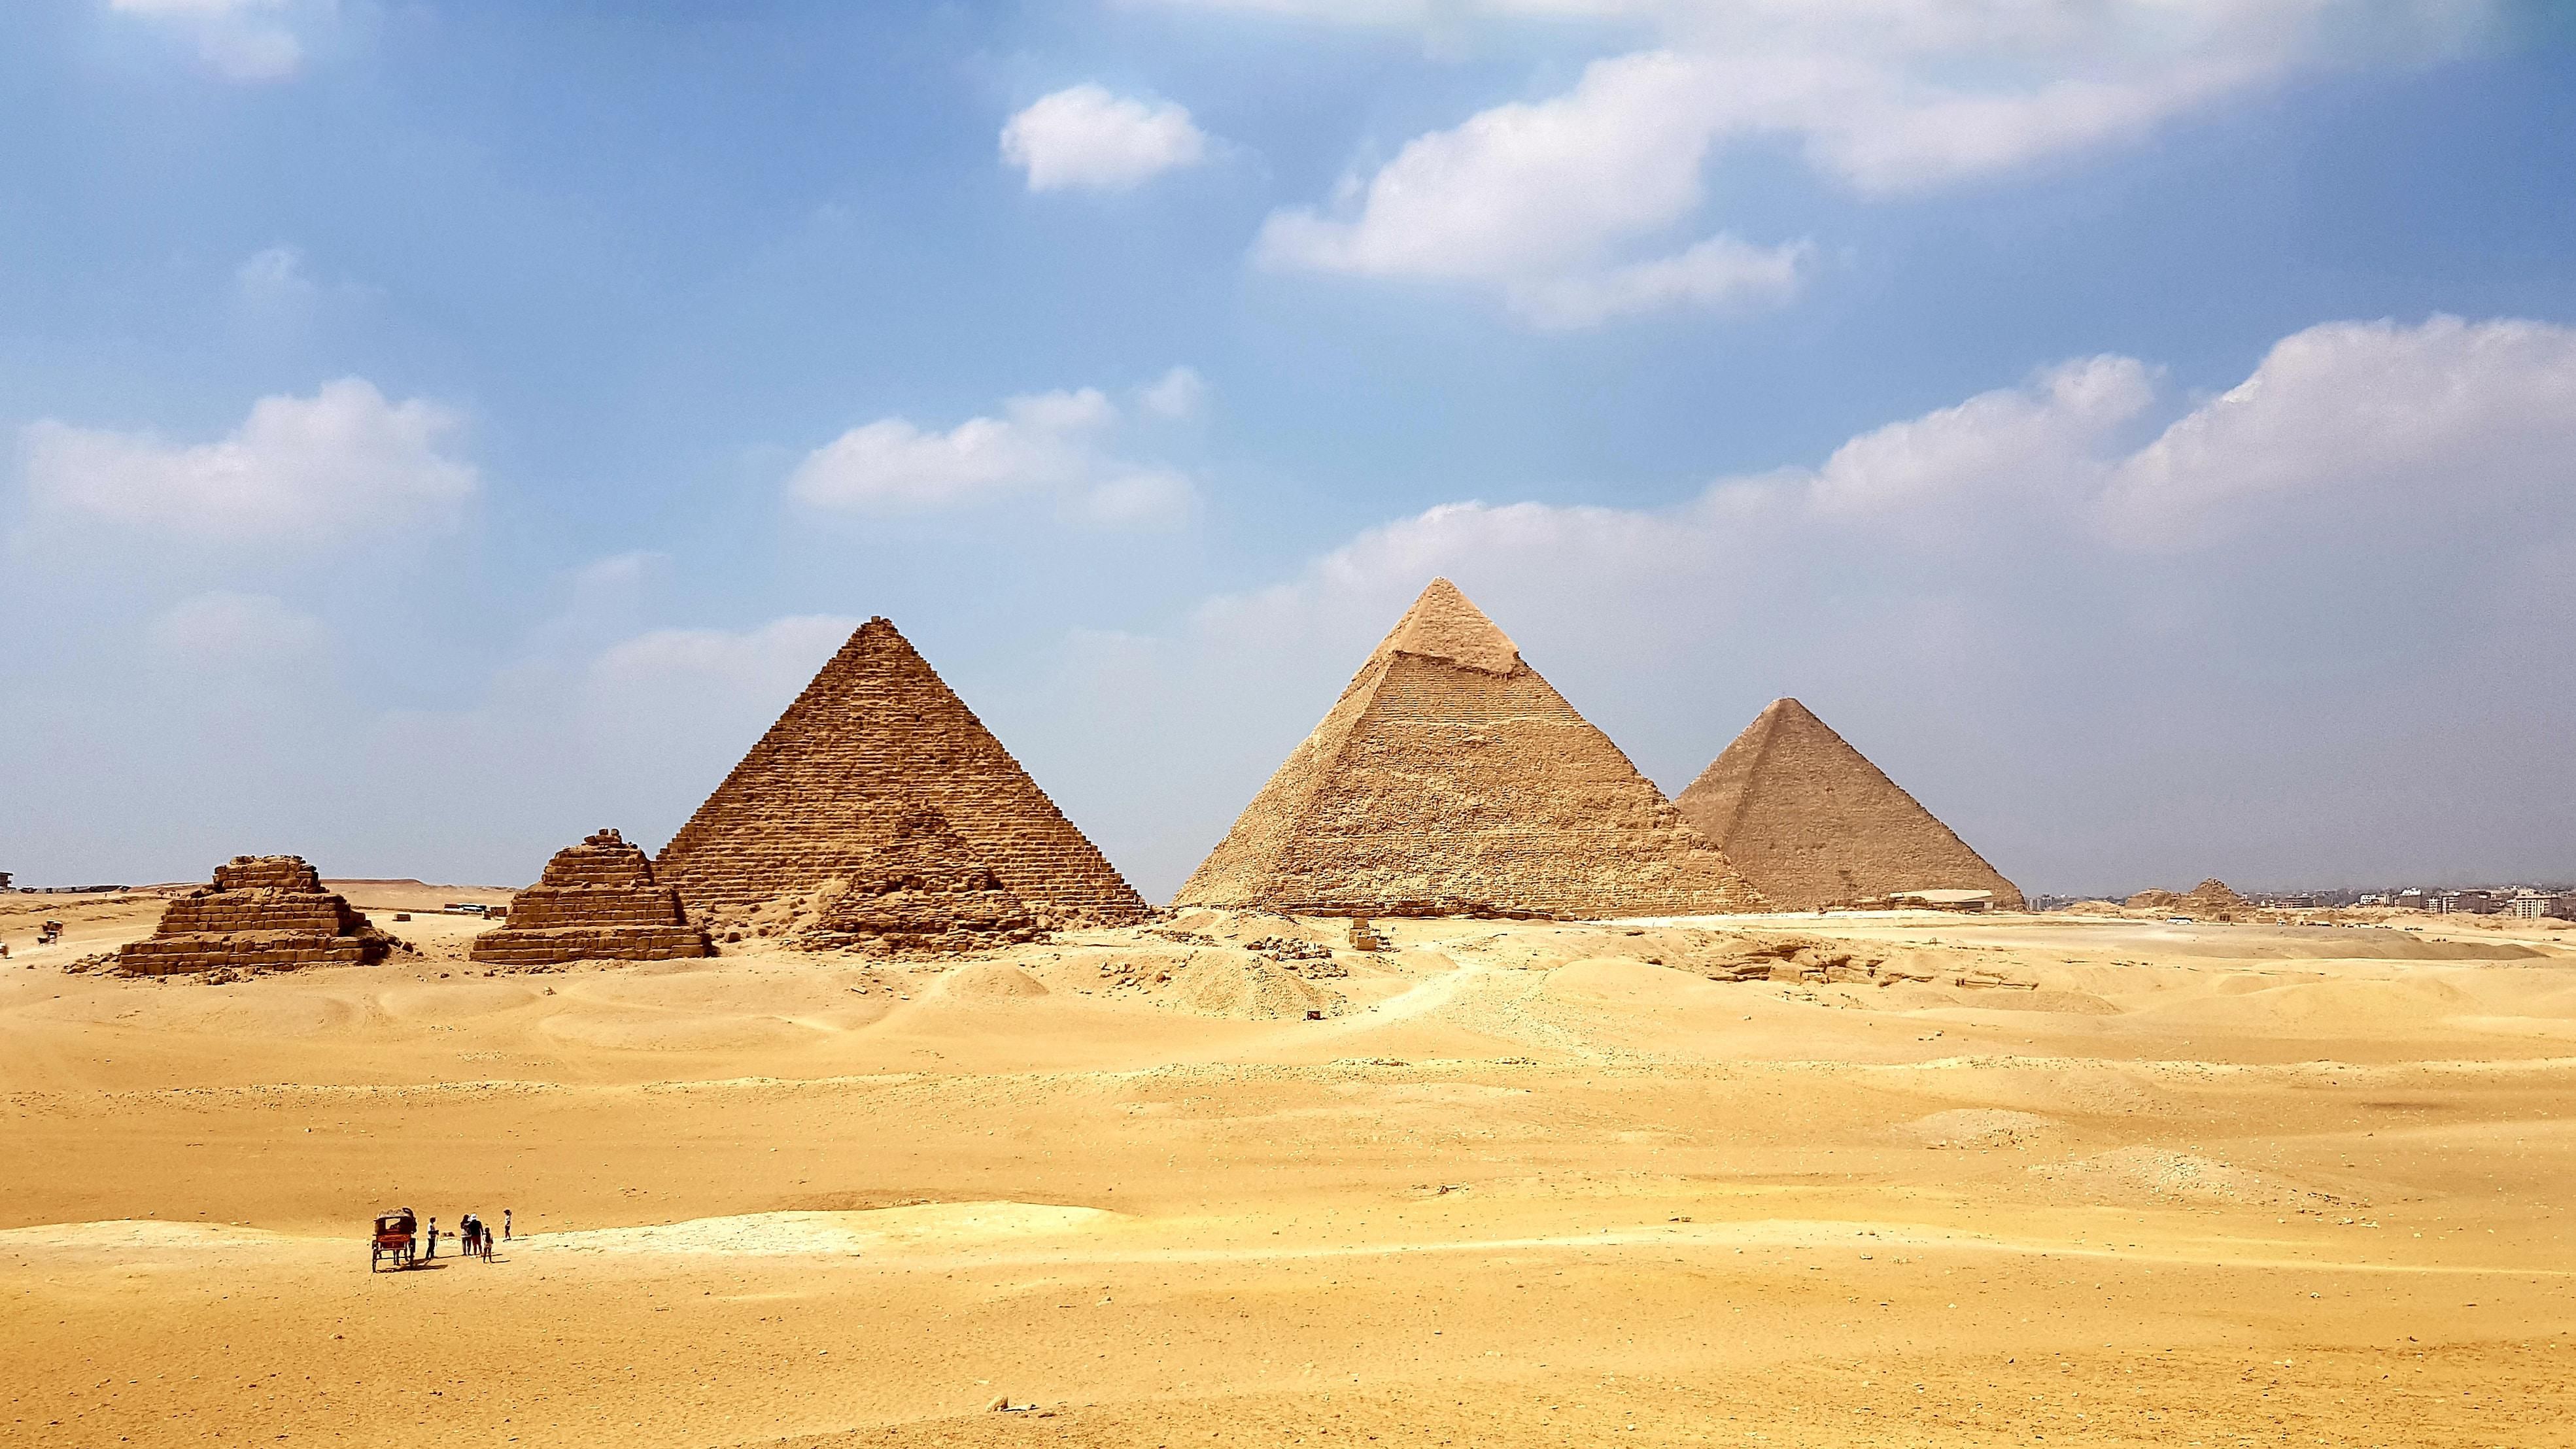 Piramisok a sivatagban.